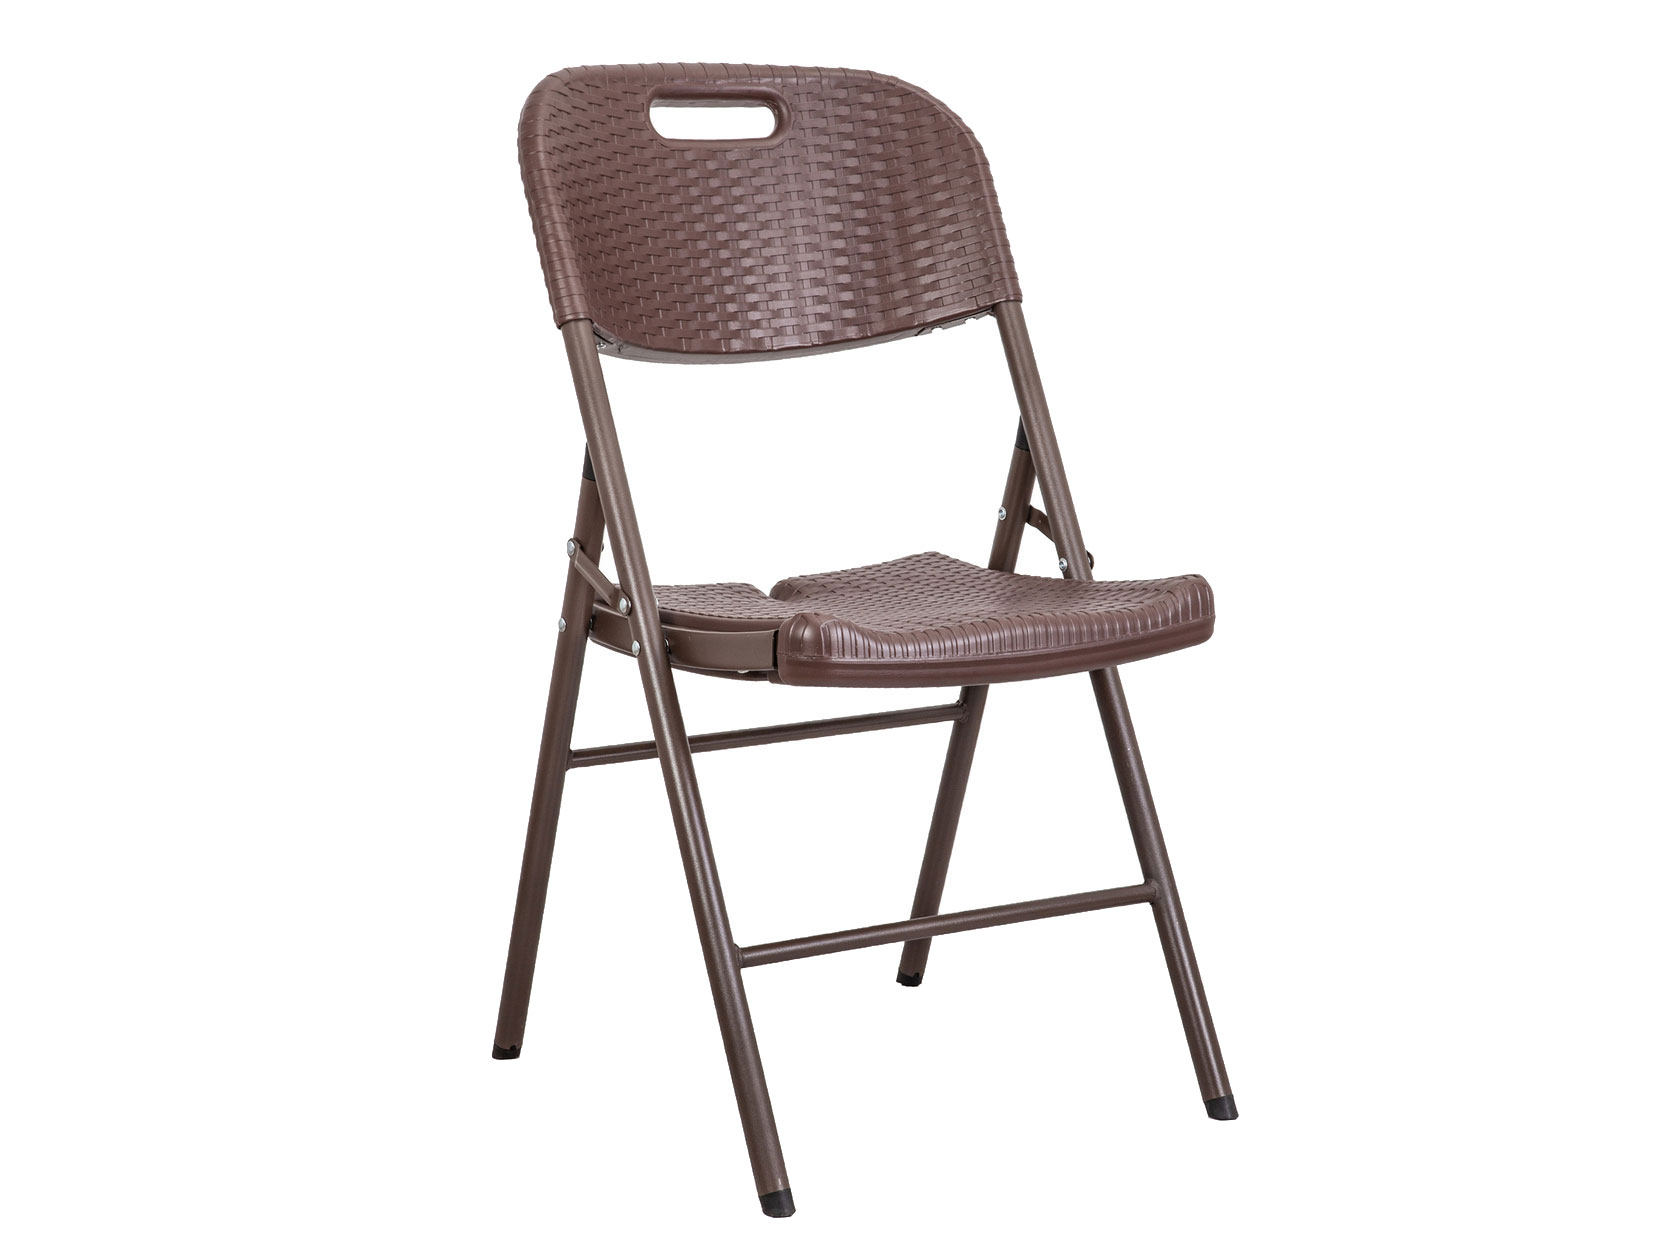 Пластиковый стул Пикси Коричневый, пластик / Коричневый, металл